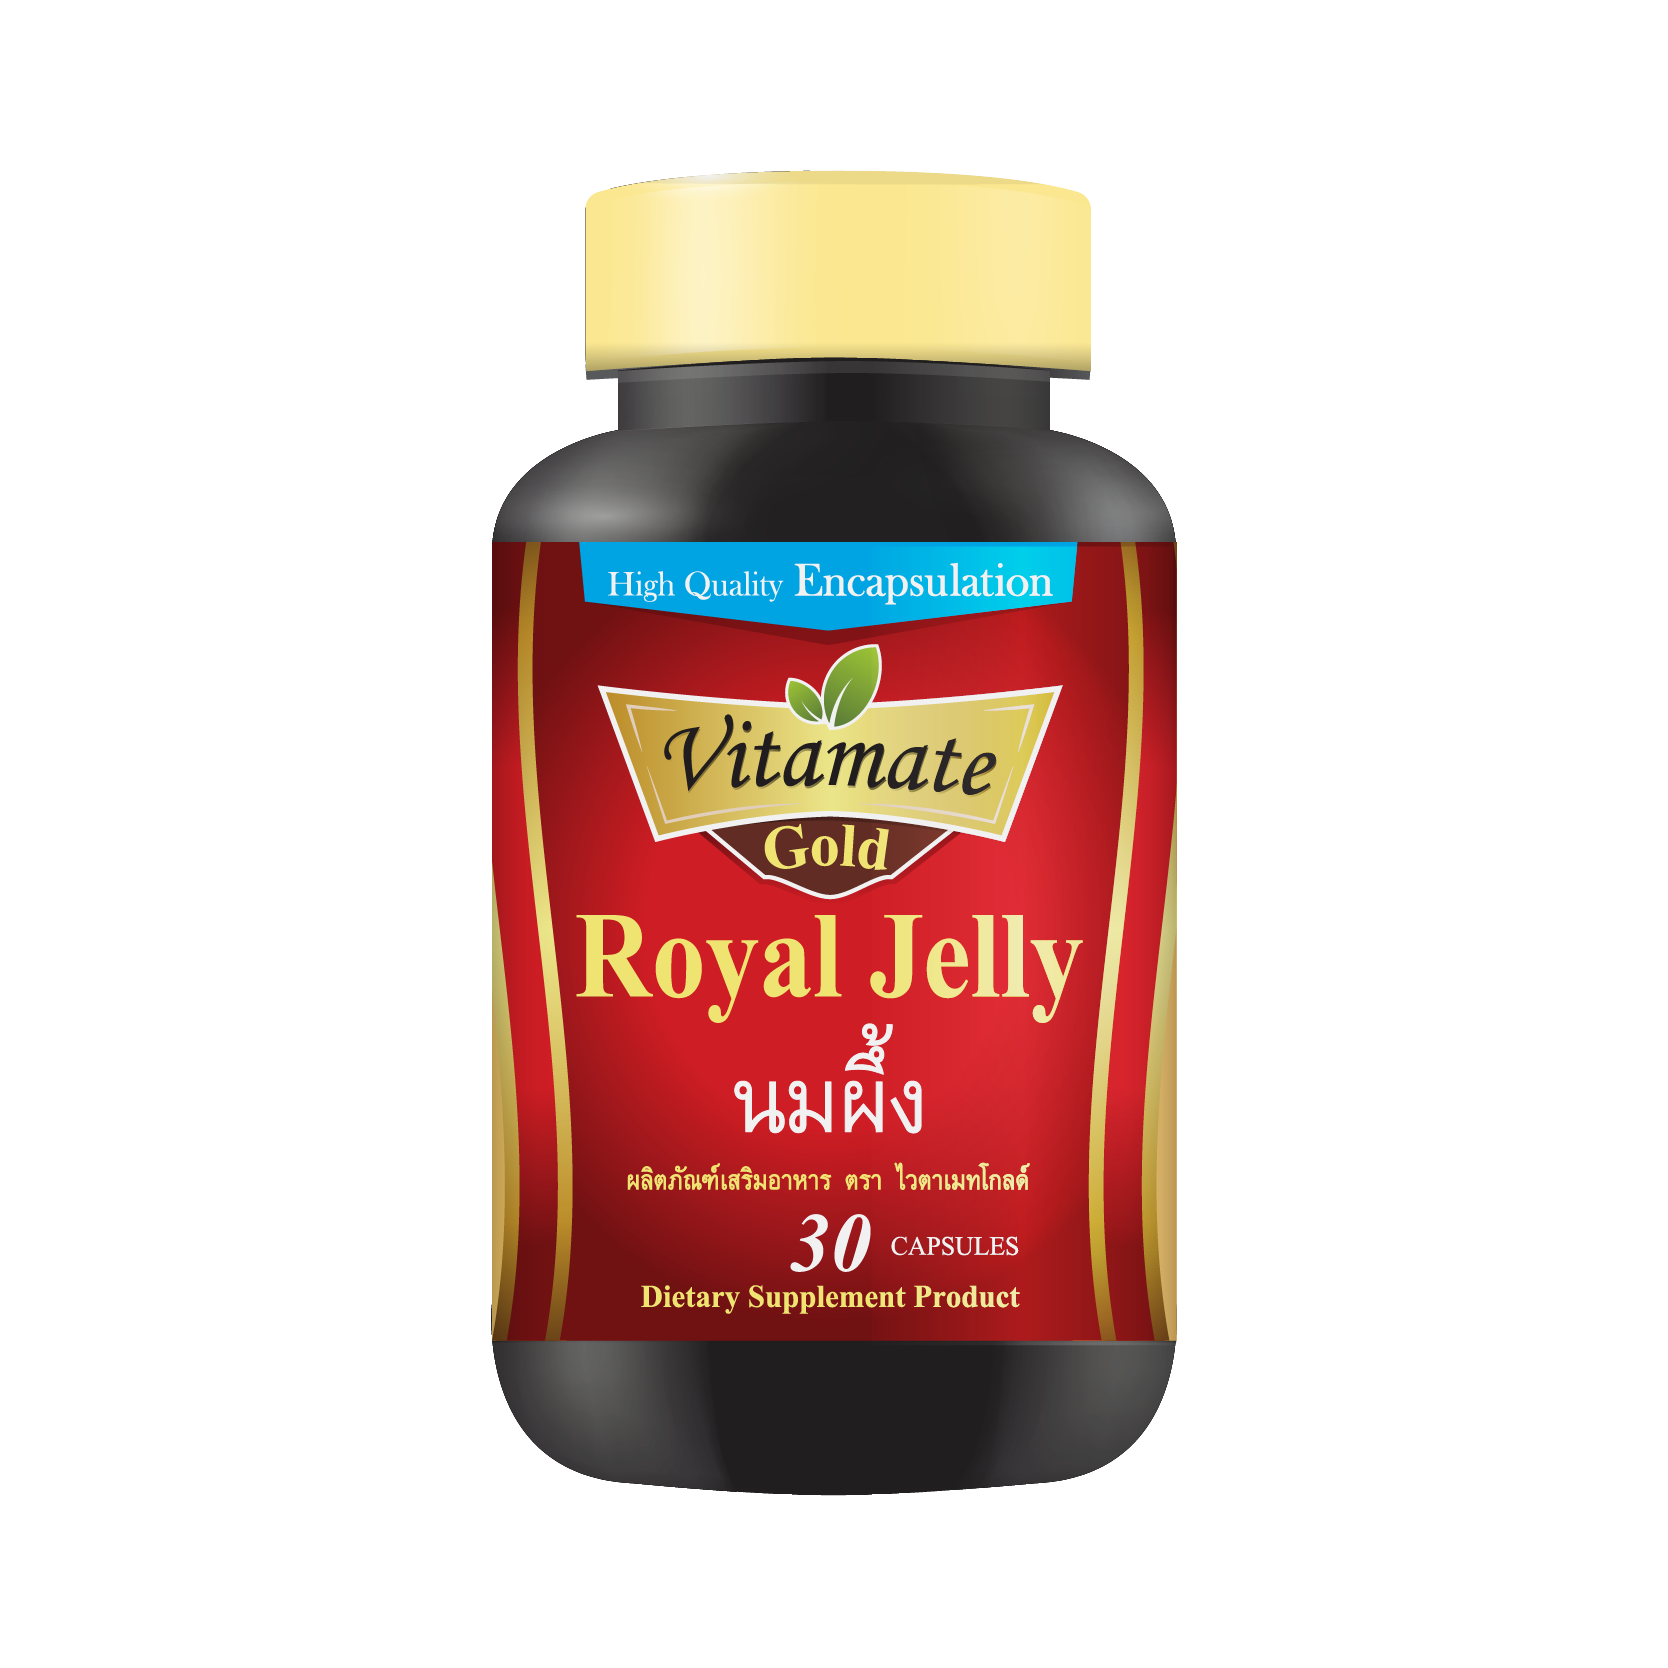 Vitamate Gold Royal Jelly 30 softgels